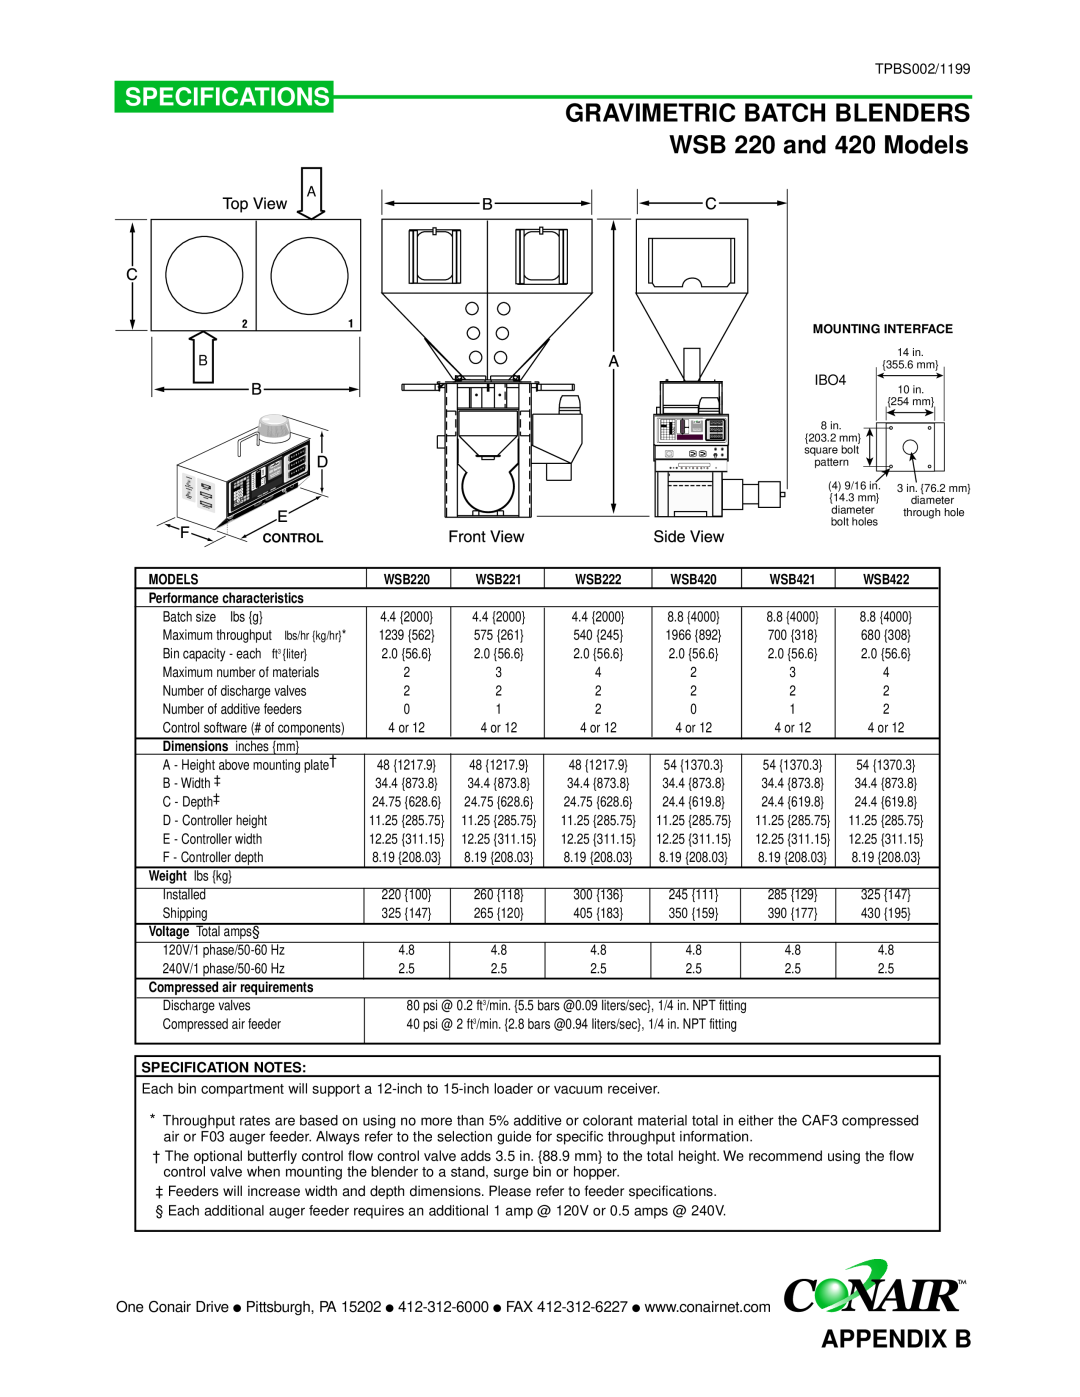 Conair GB manual GRAVIMETRIC BATCH BLENDERS WSB 220 and 420 Models, Specifications, Appendix B 